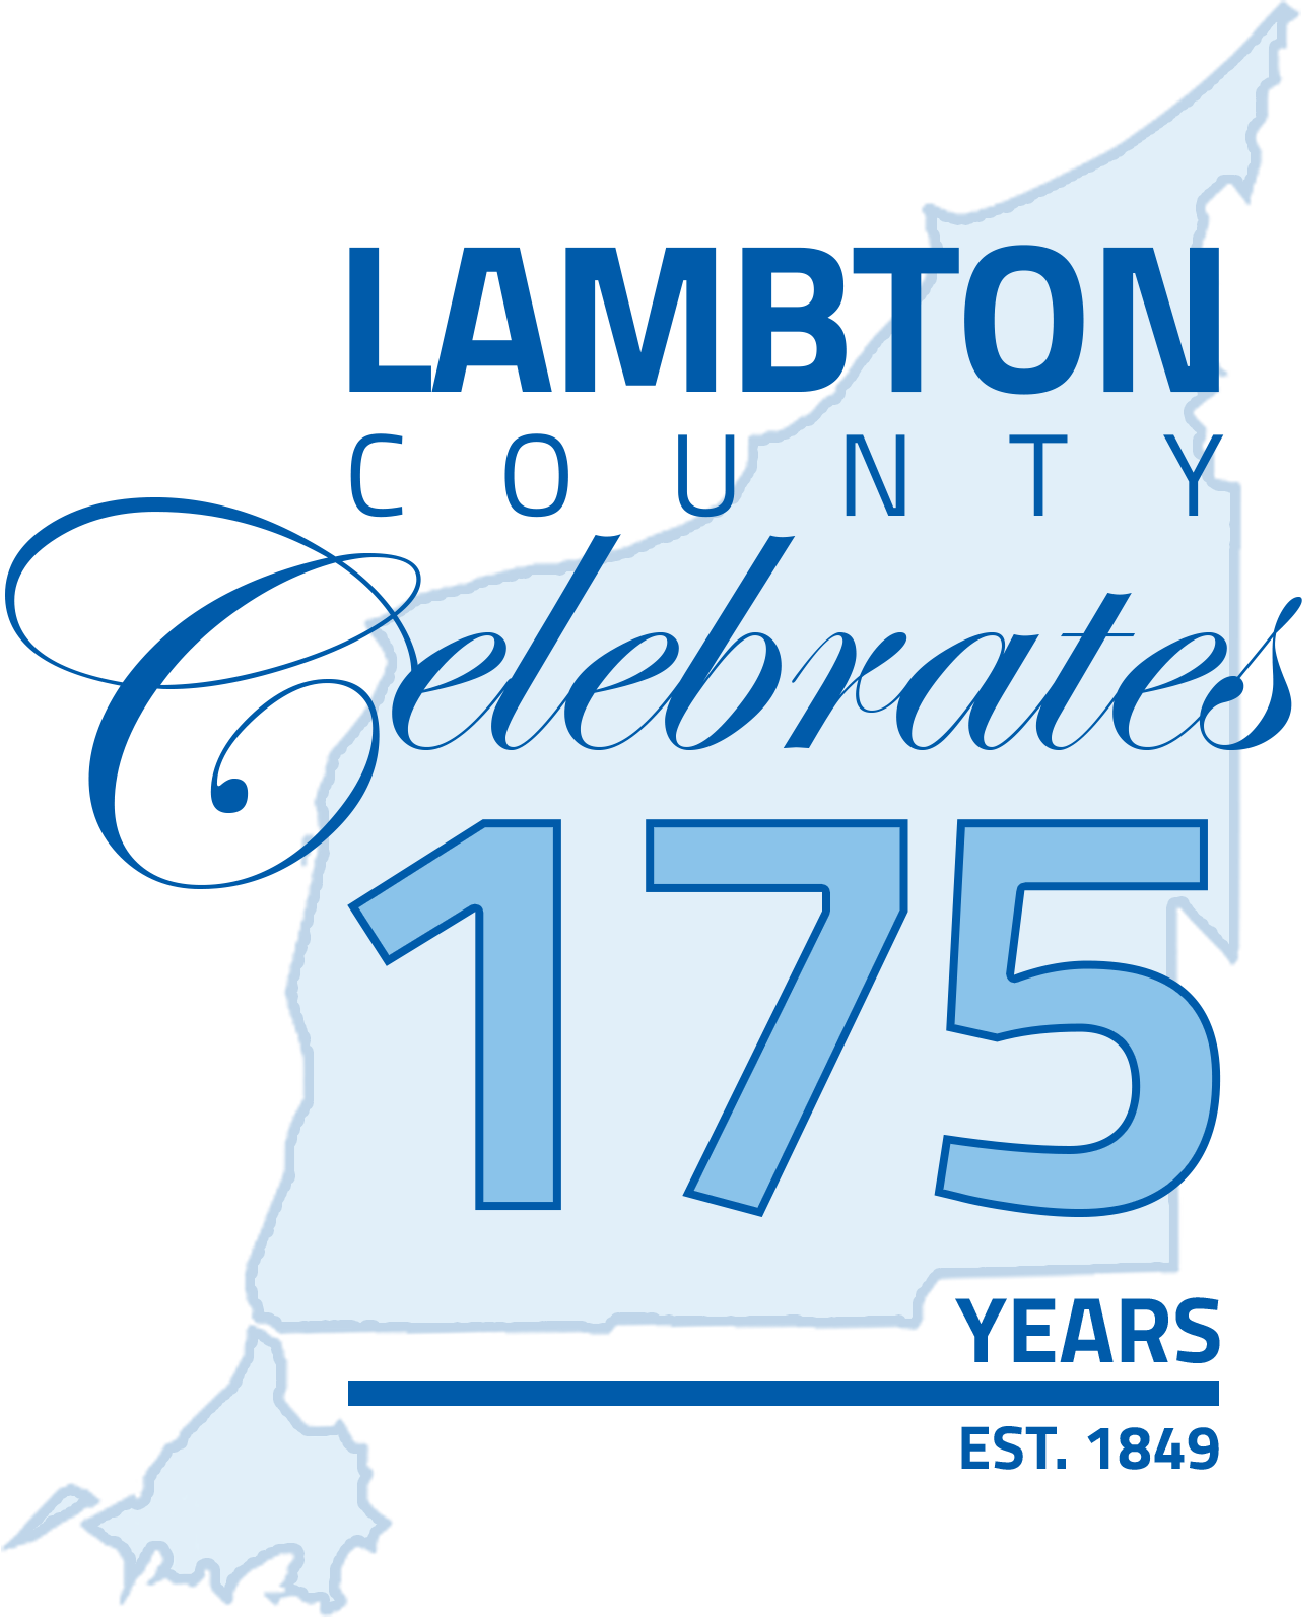 Lambton county border with "Celebrates 175 est. 1849" on it.